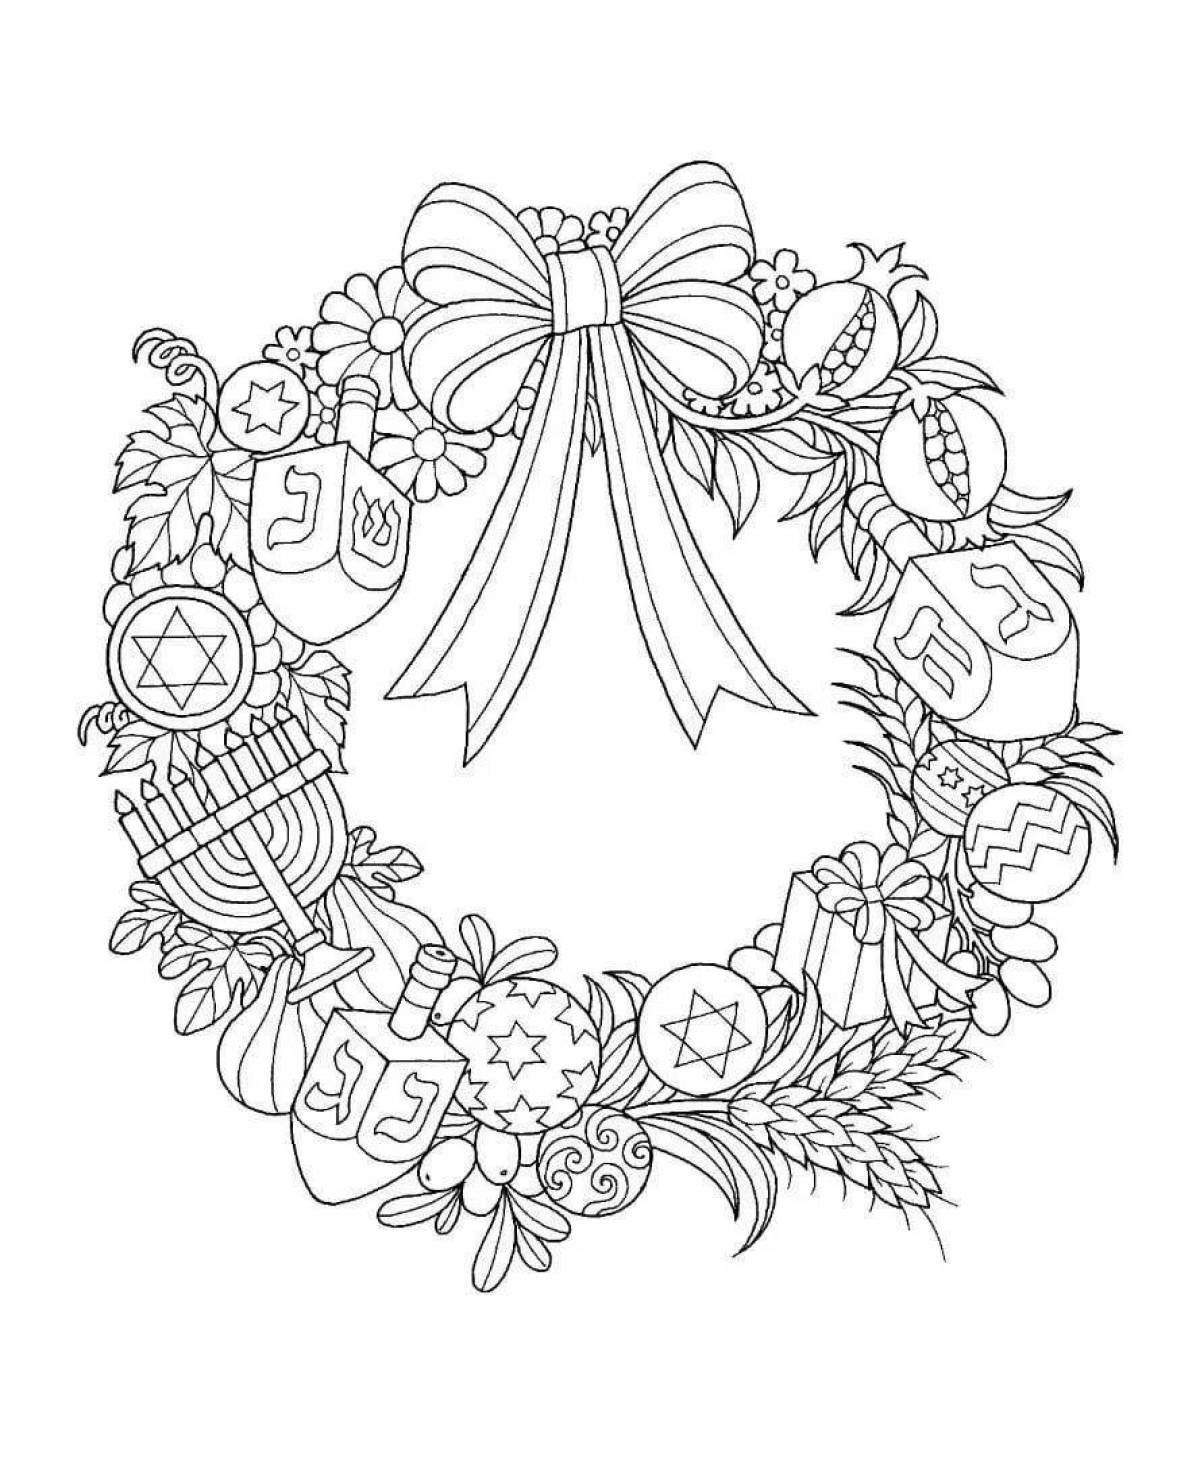 Harmonious wreath coloring page